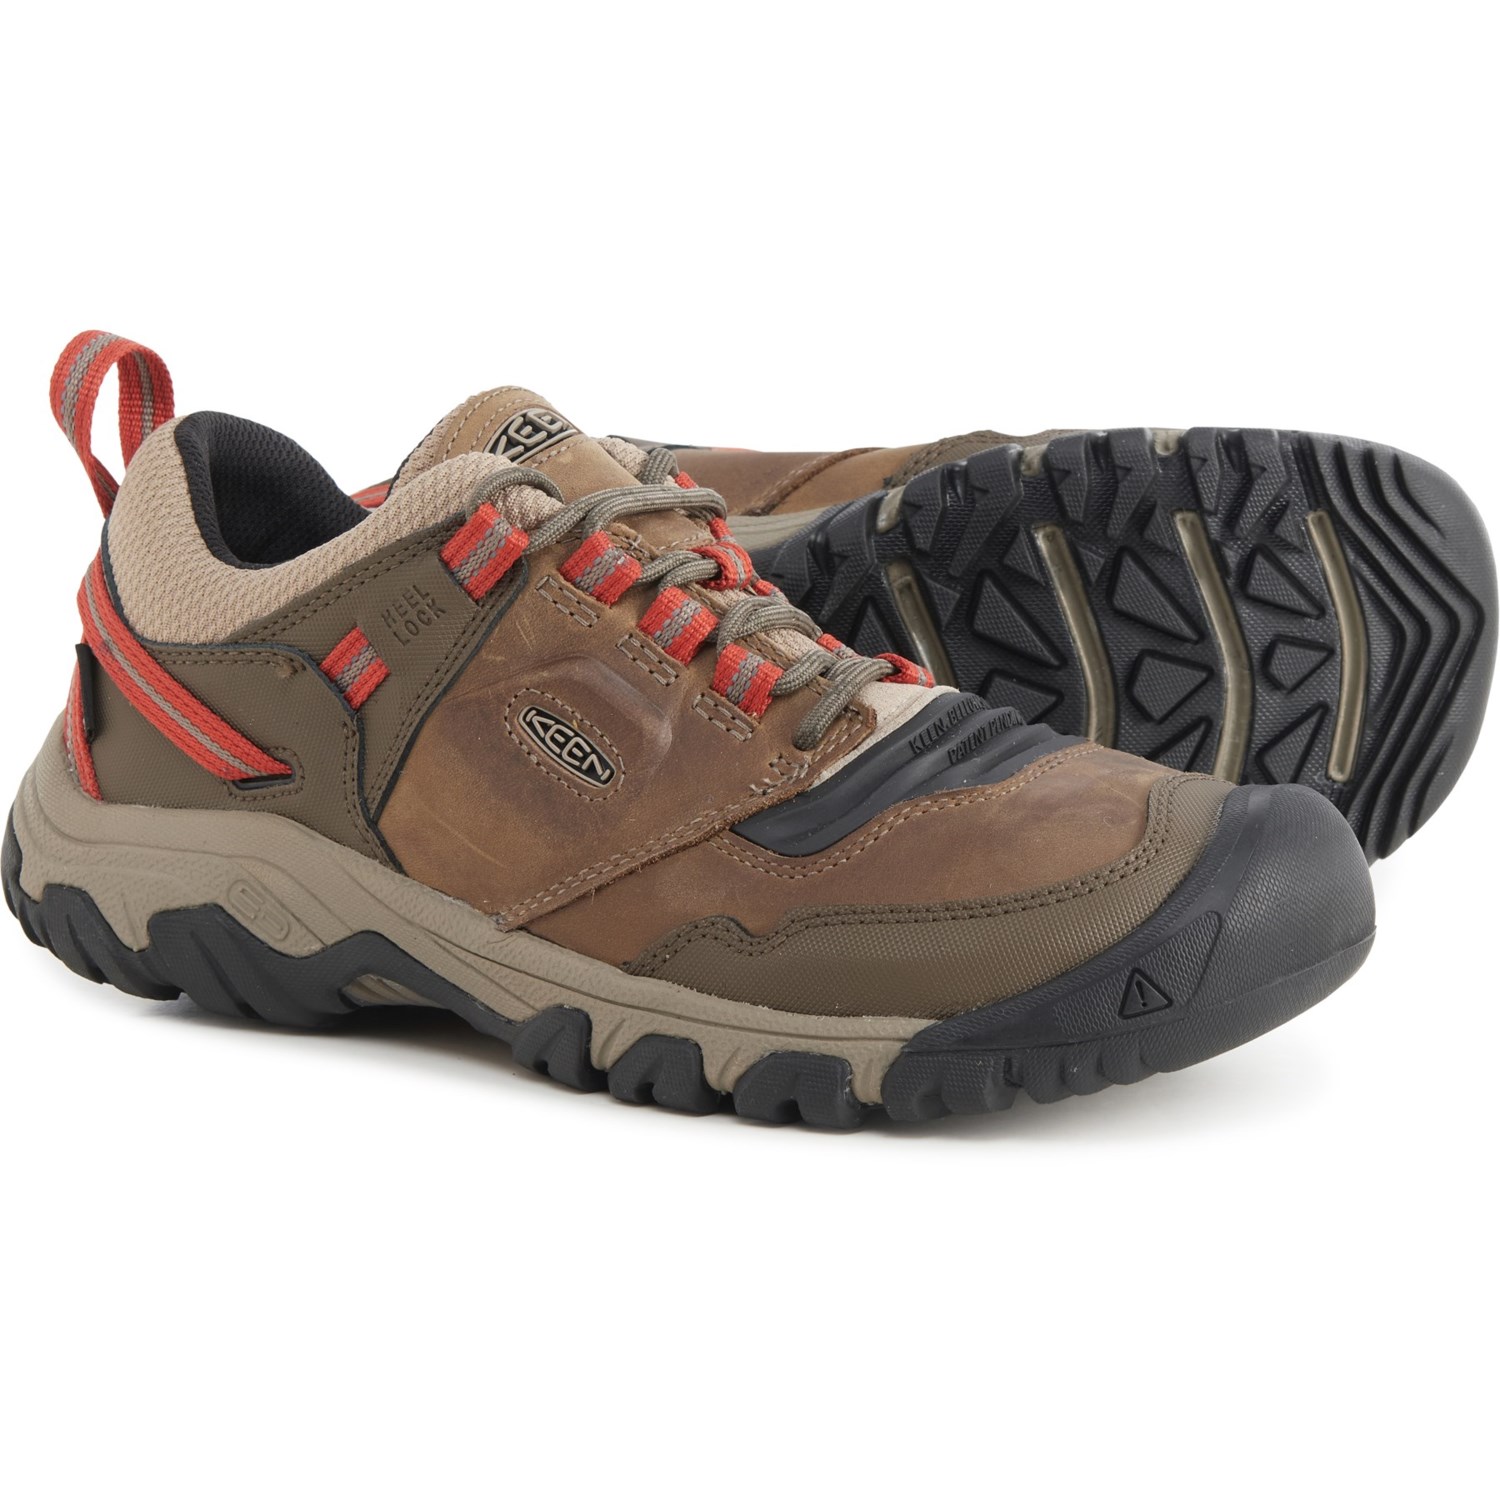 Keen Ridge Flex Hiking Shoes (For Men) - Save 36%